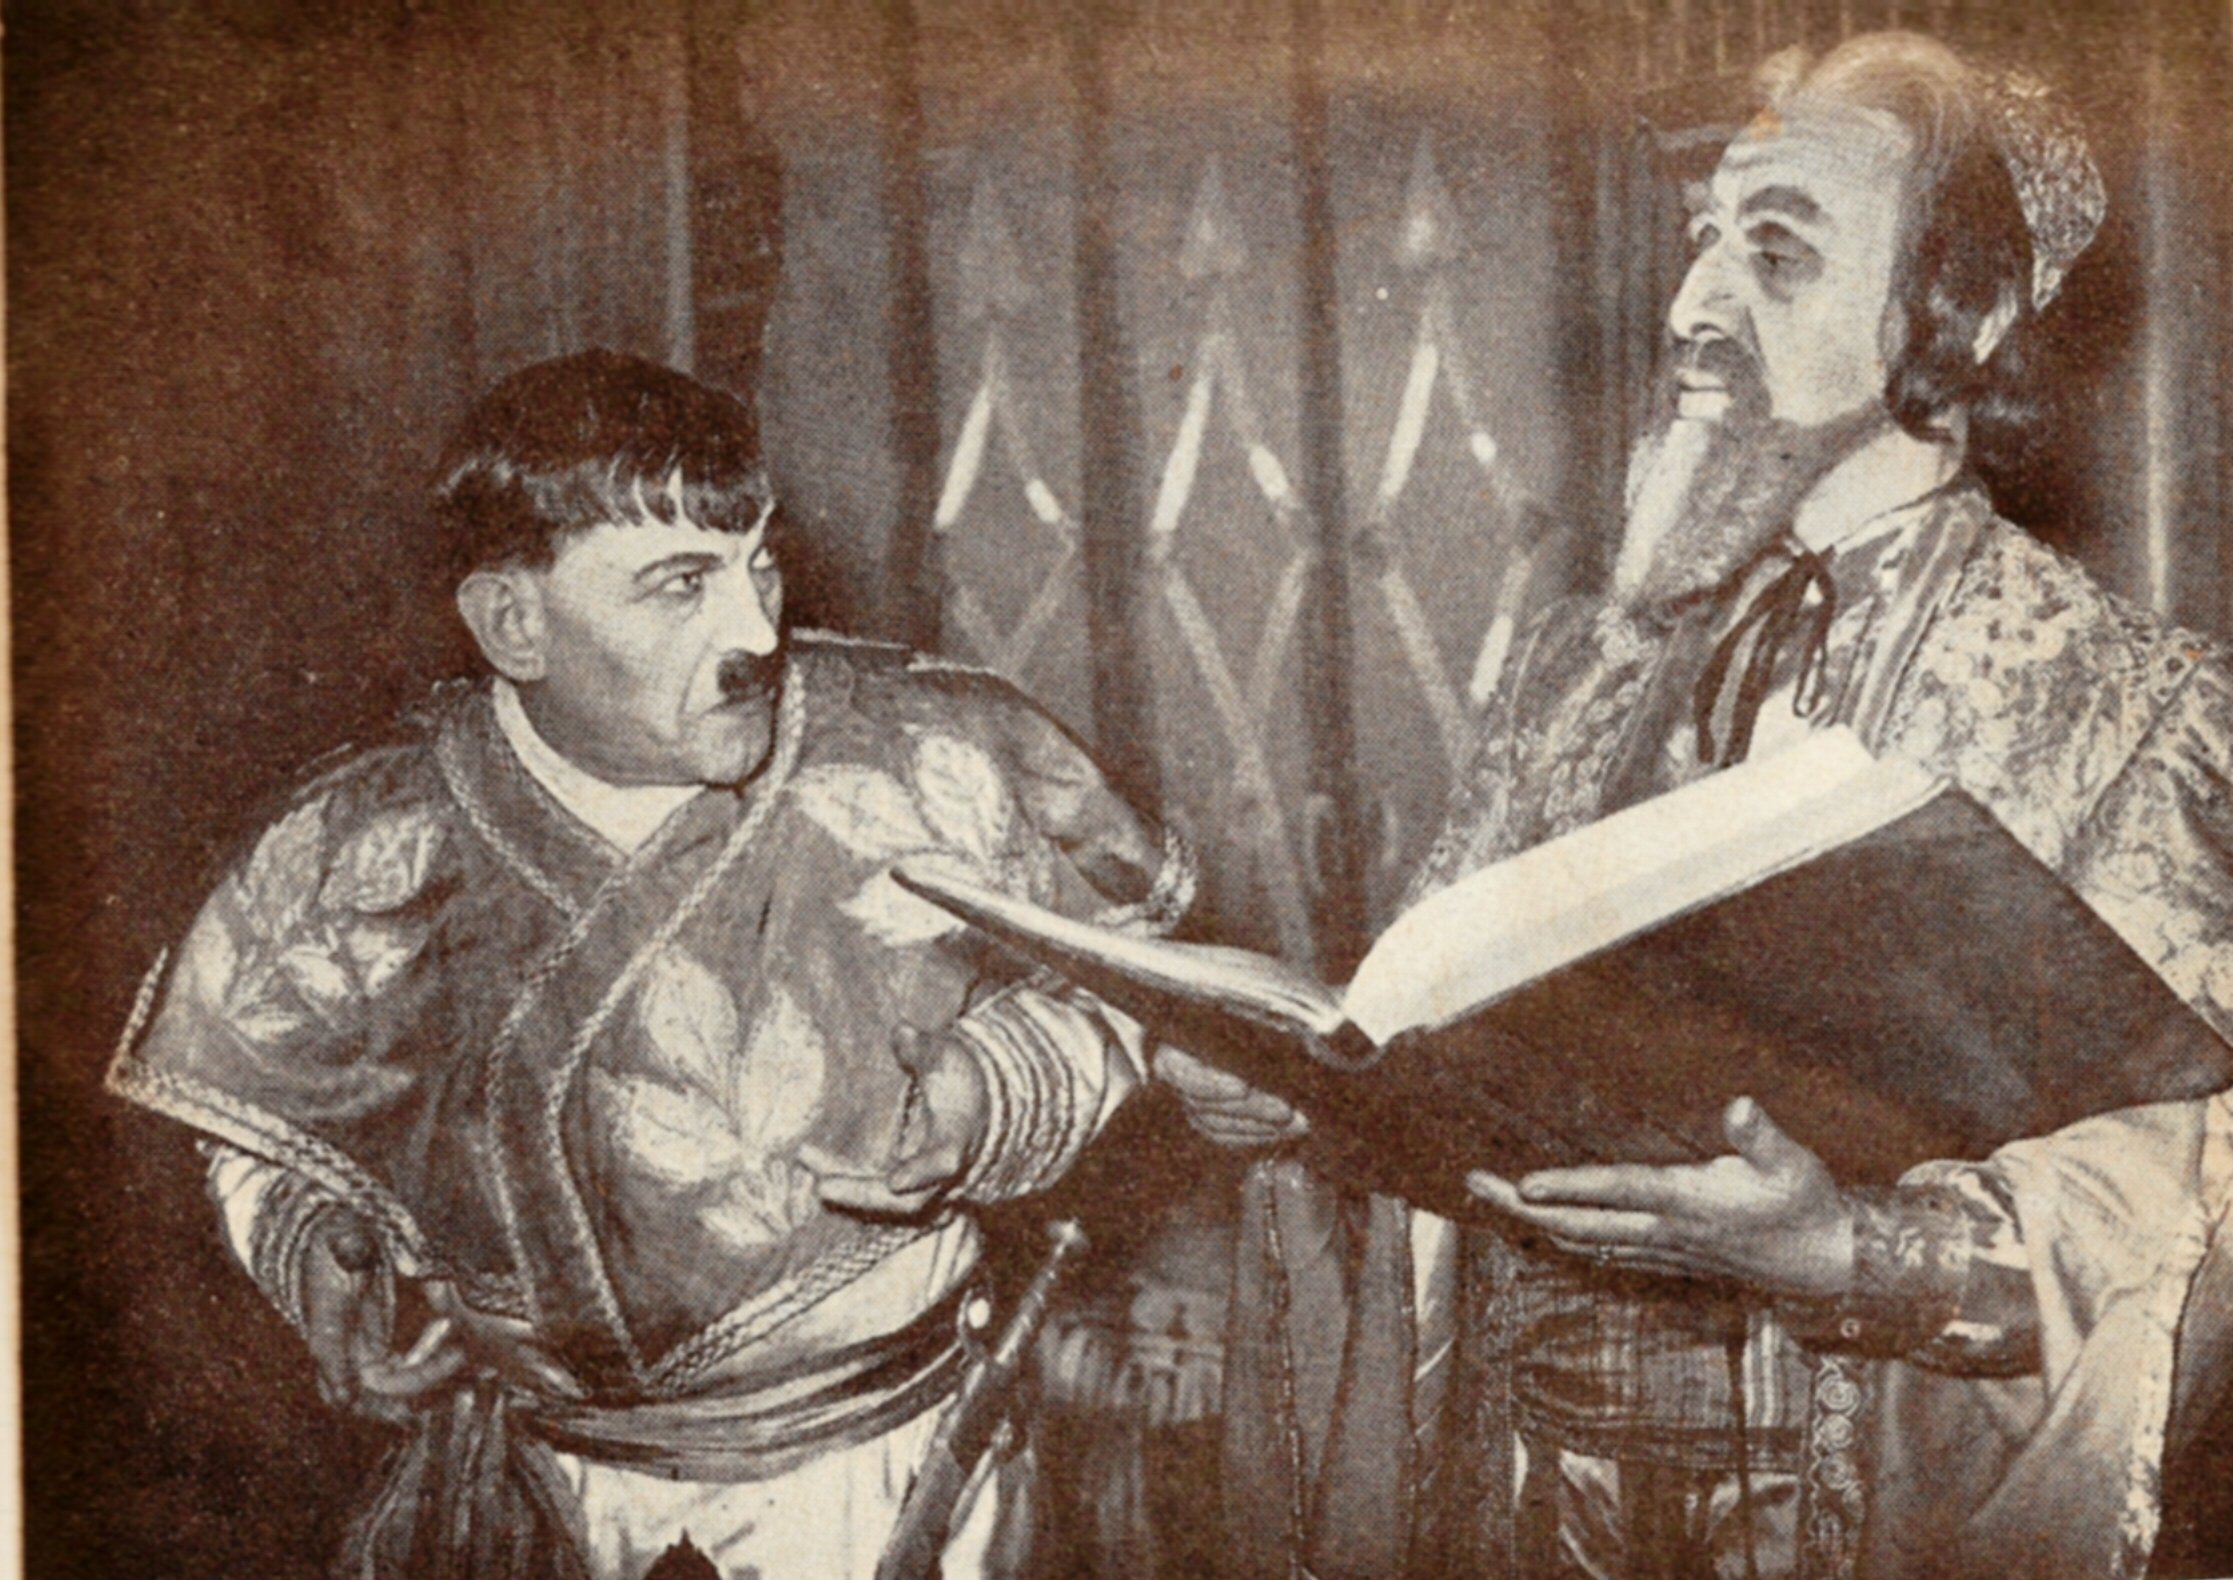 Sulamith - Meier Tzelniker with Joseph Sherman (Haman) made up to look like Hitler